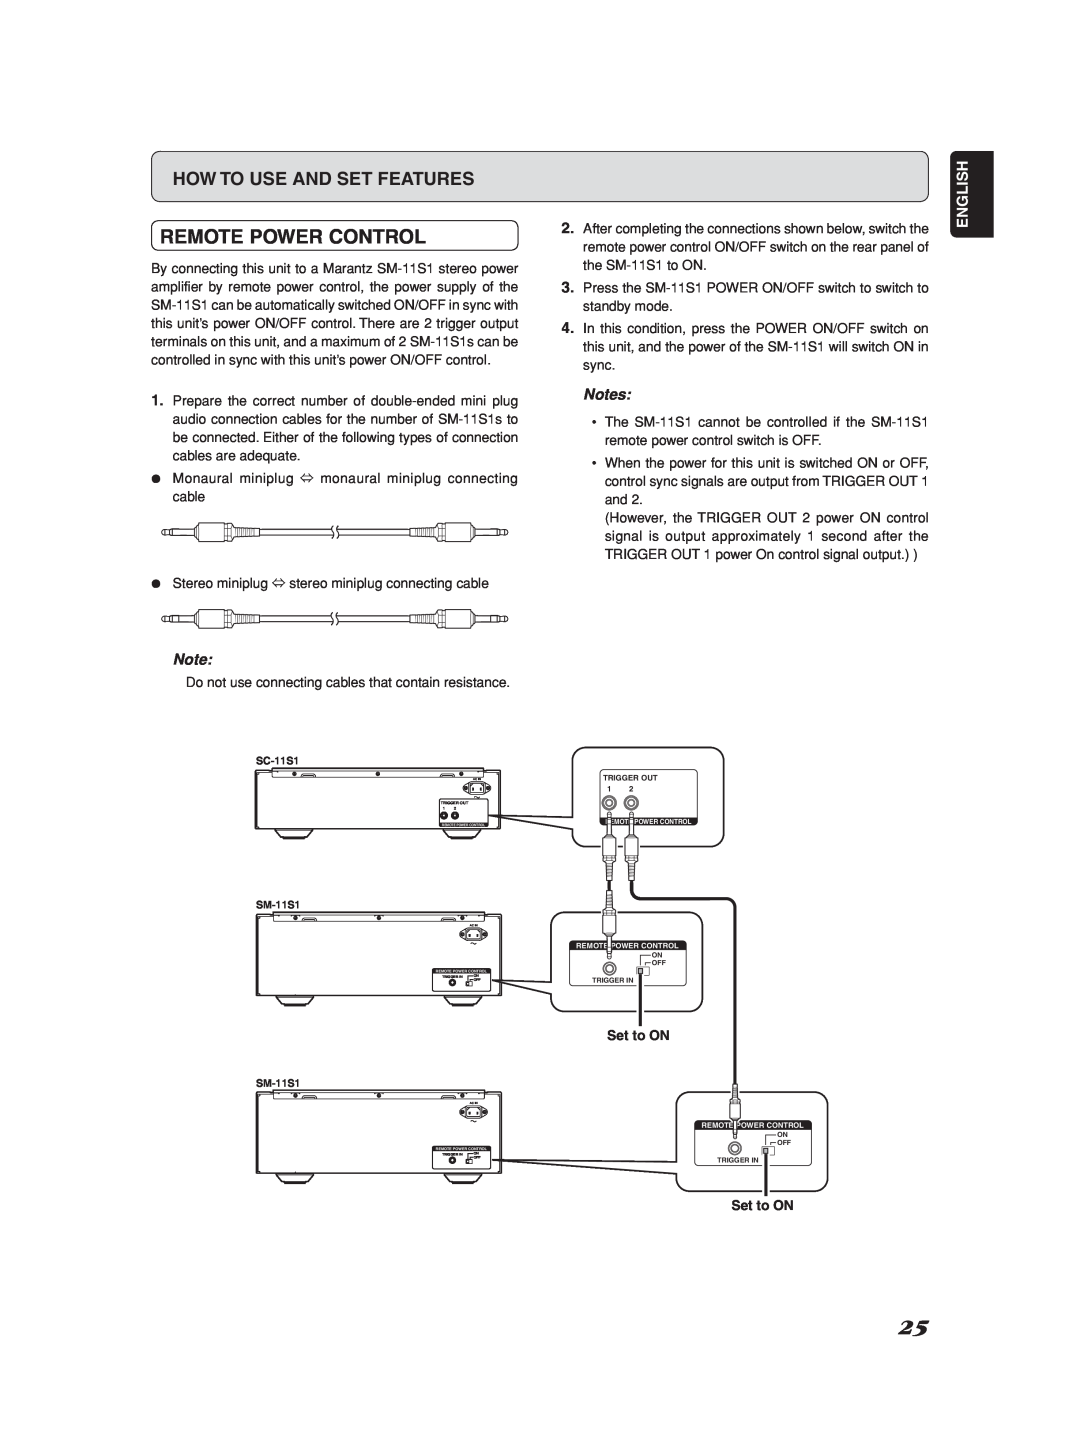 Marantz Model SC-11S1 manual Remote Power Control, English, Set to ON 